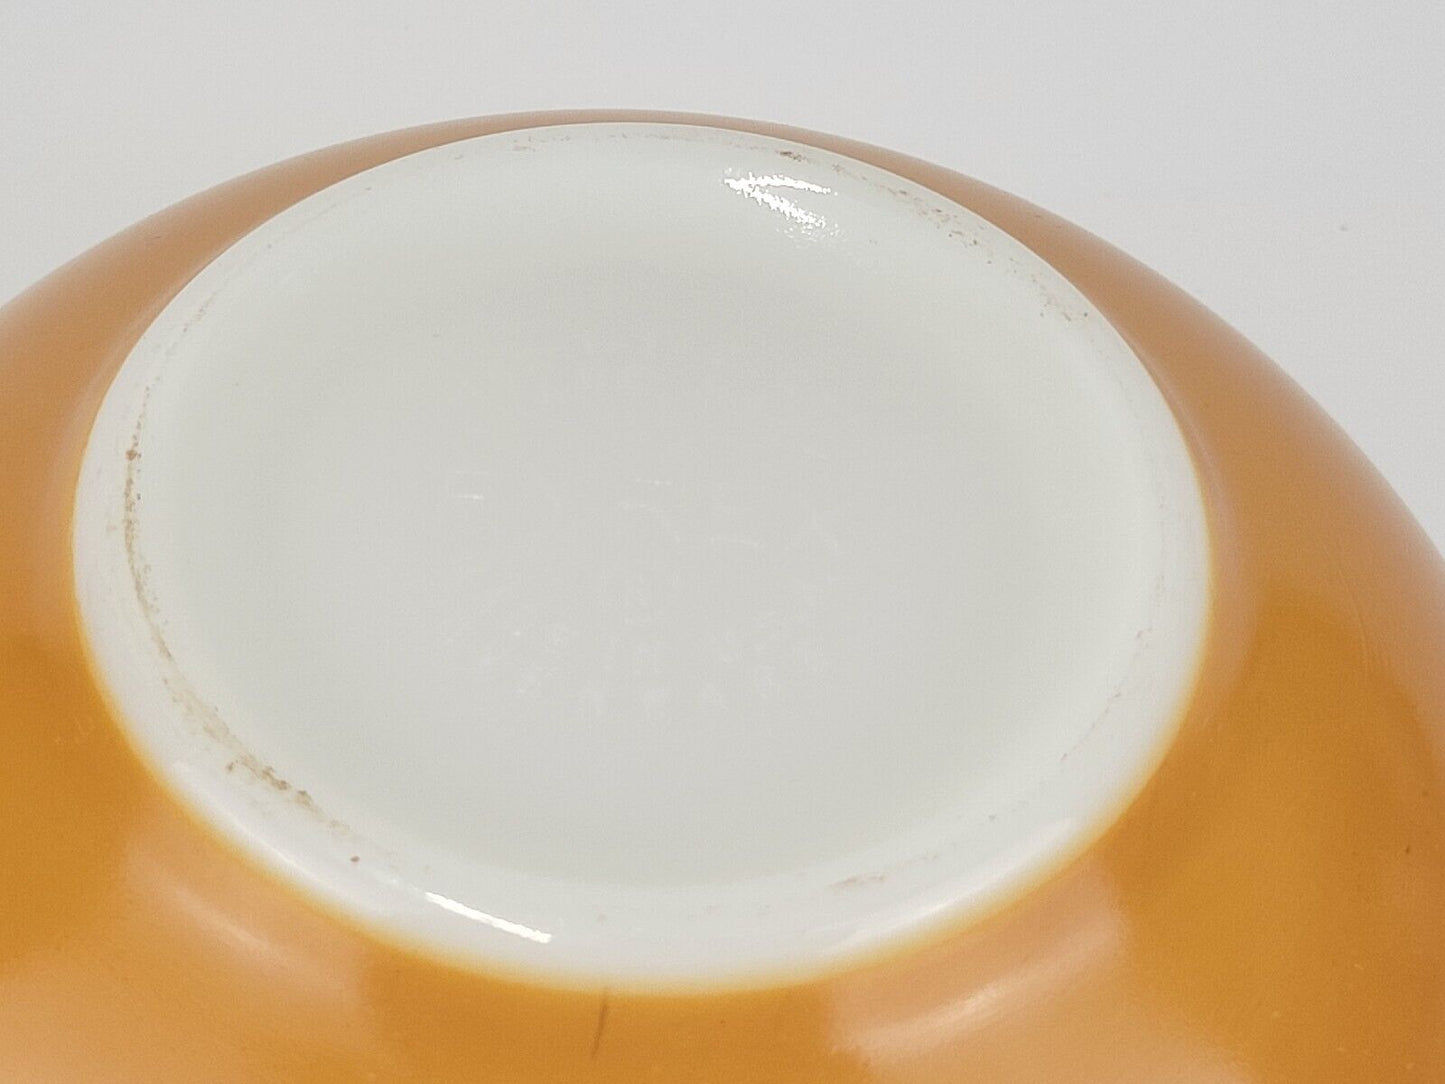 Pyrex Cinderella Bowl Sunburst Orange Color 1 1/2 qt. 442 T.M.32 Made - USA 1968